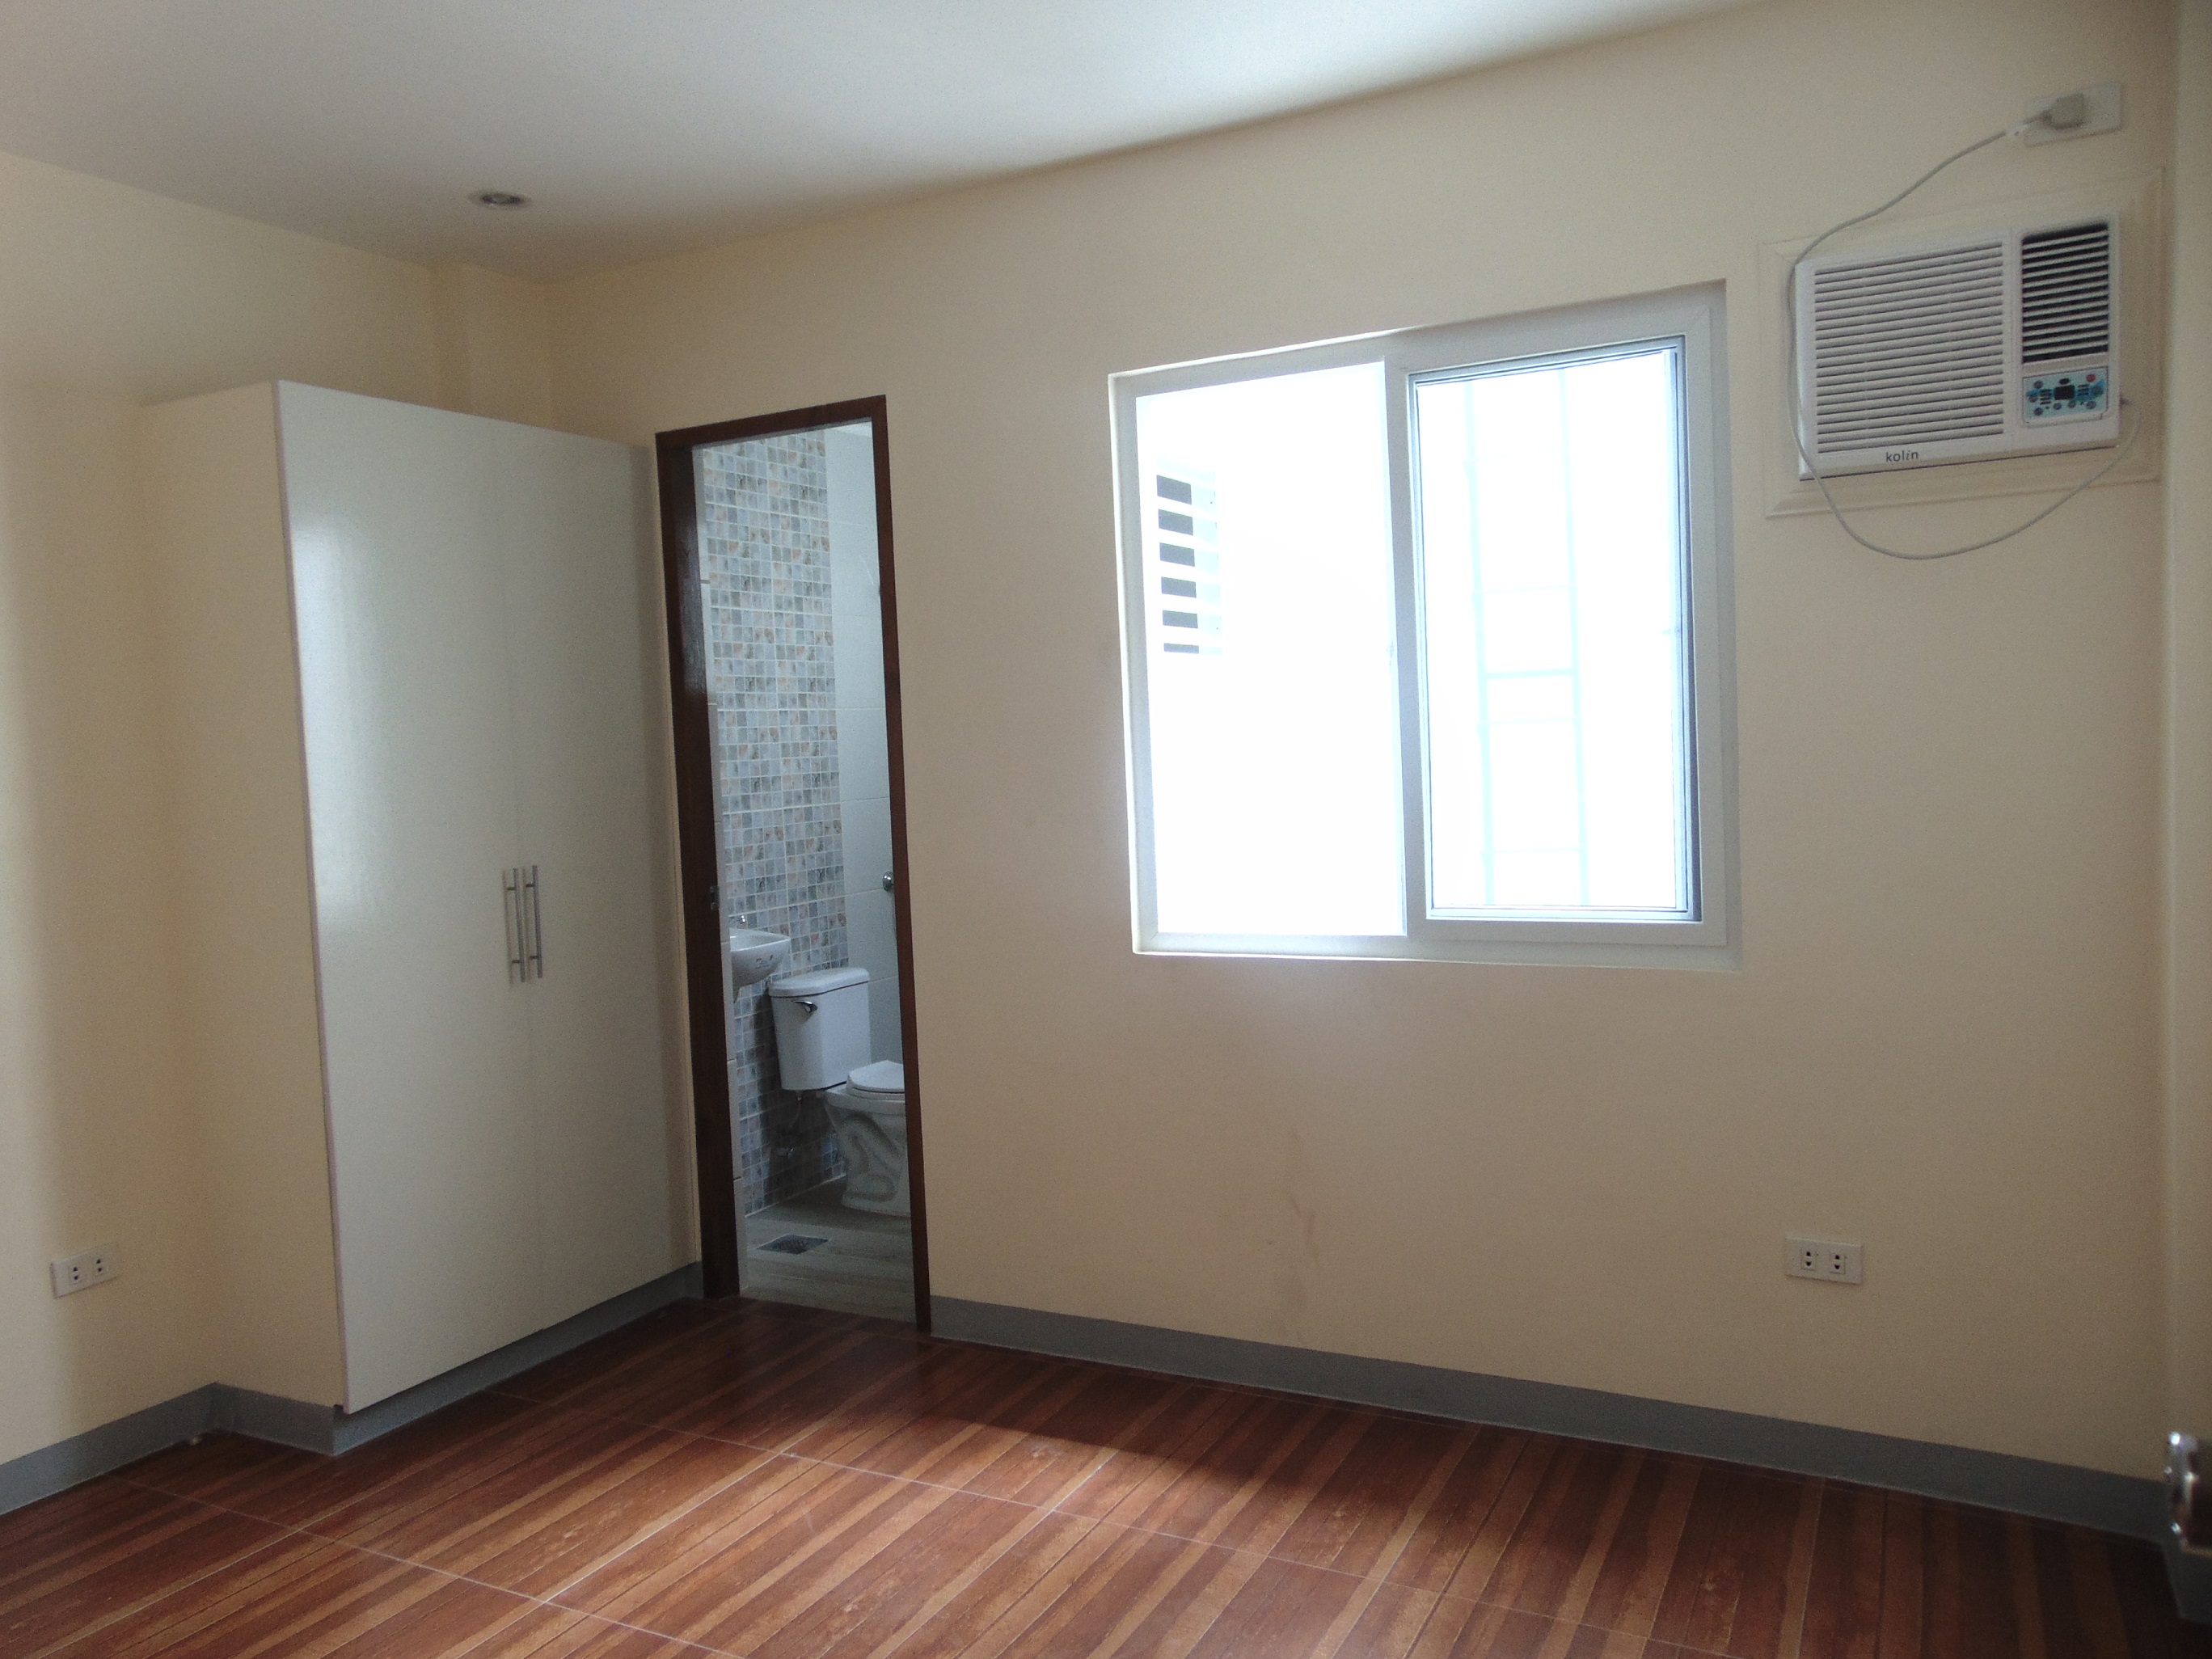 3-bedroom-semi-furnished-duplex-apartment-in-capitol-cebu-city